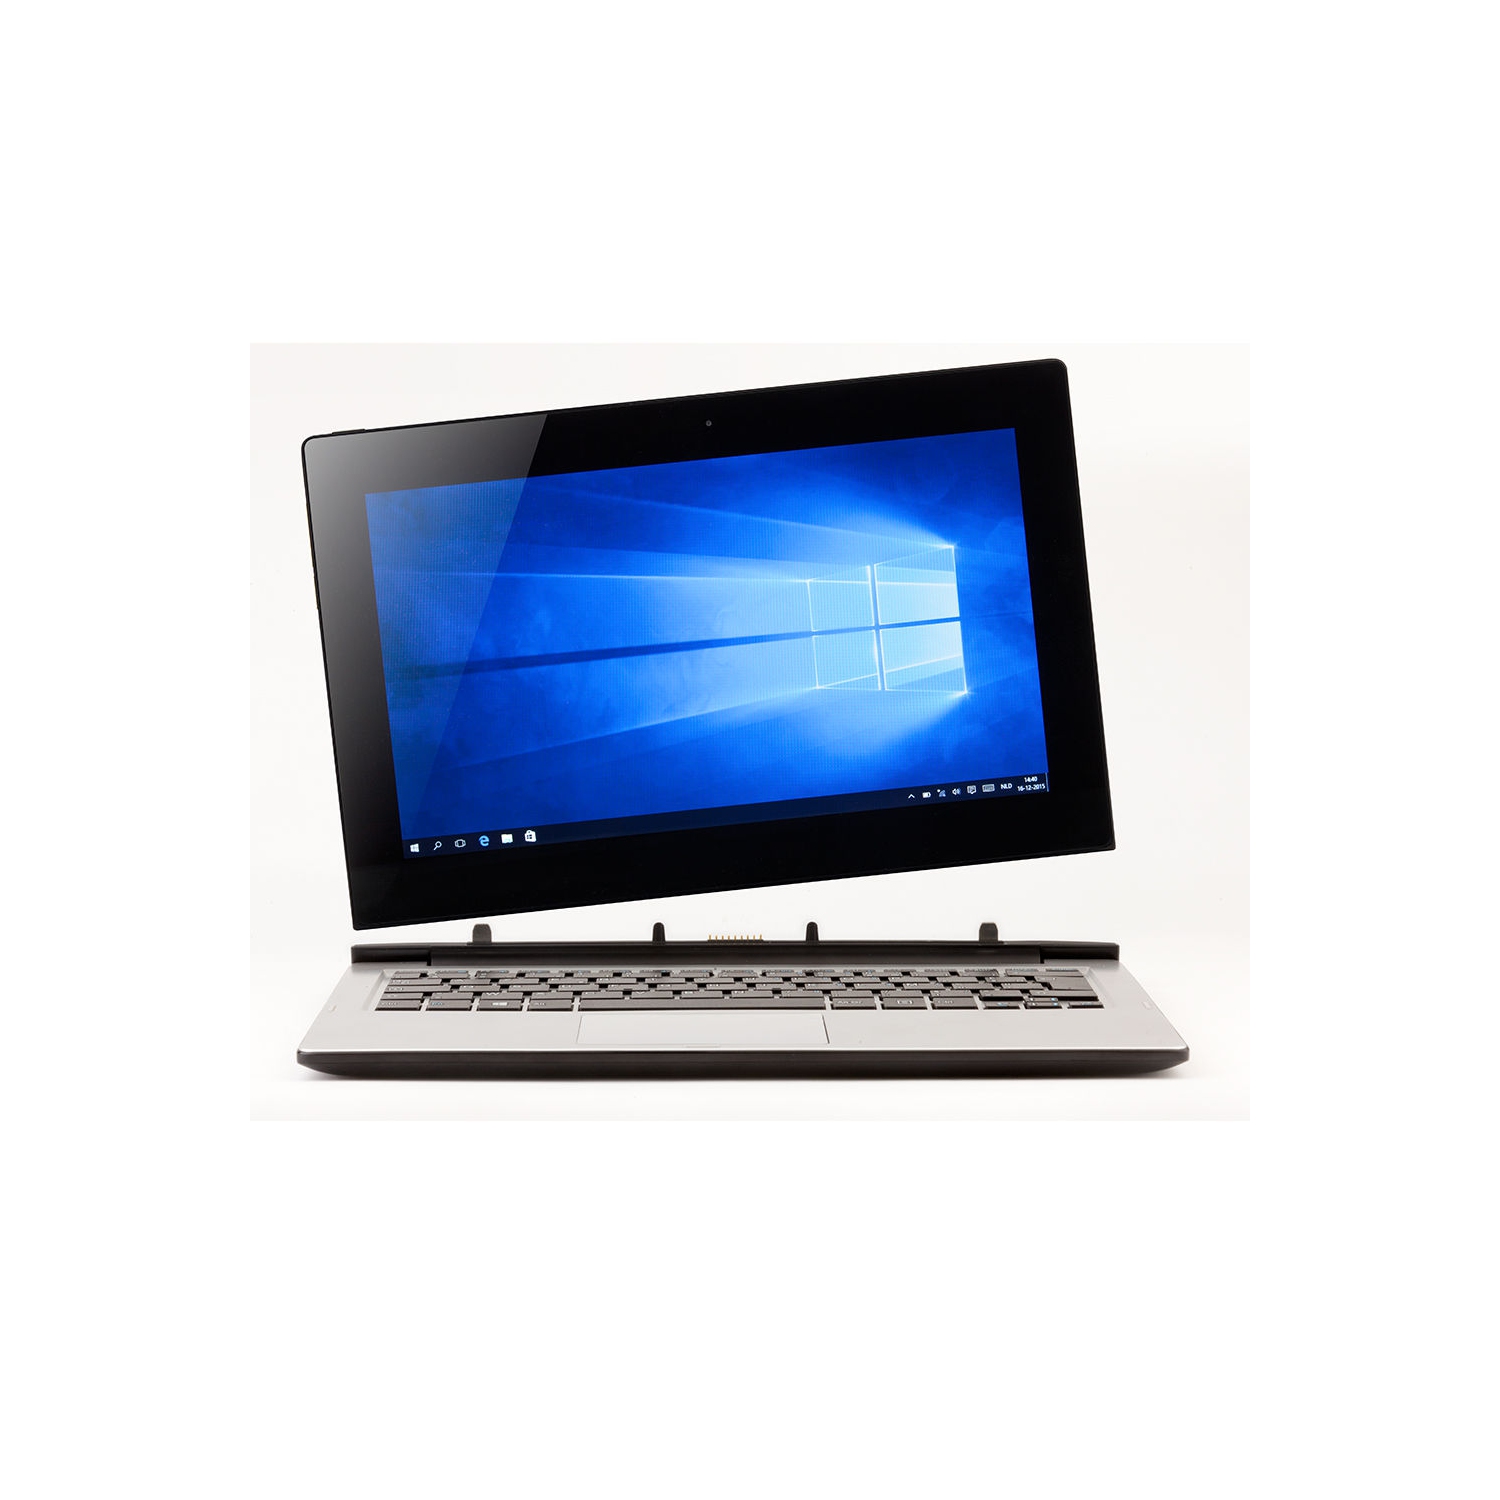 Refurbished (Good) - Acer N15P2 Aspire 10.1" Switch 2-in-1 Laptop w/ 1.33GHz, 2GB RAM, 32GB HDD